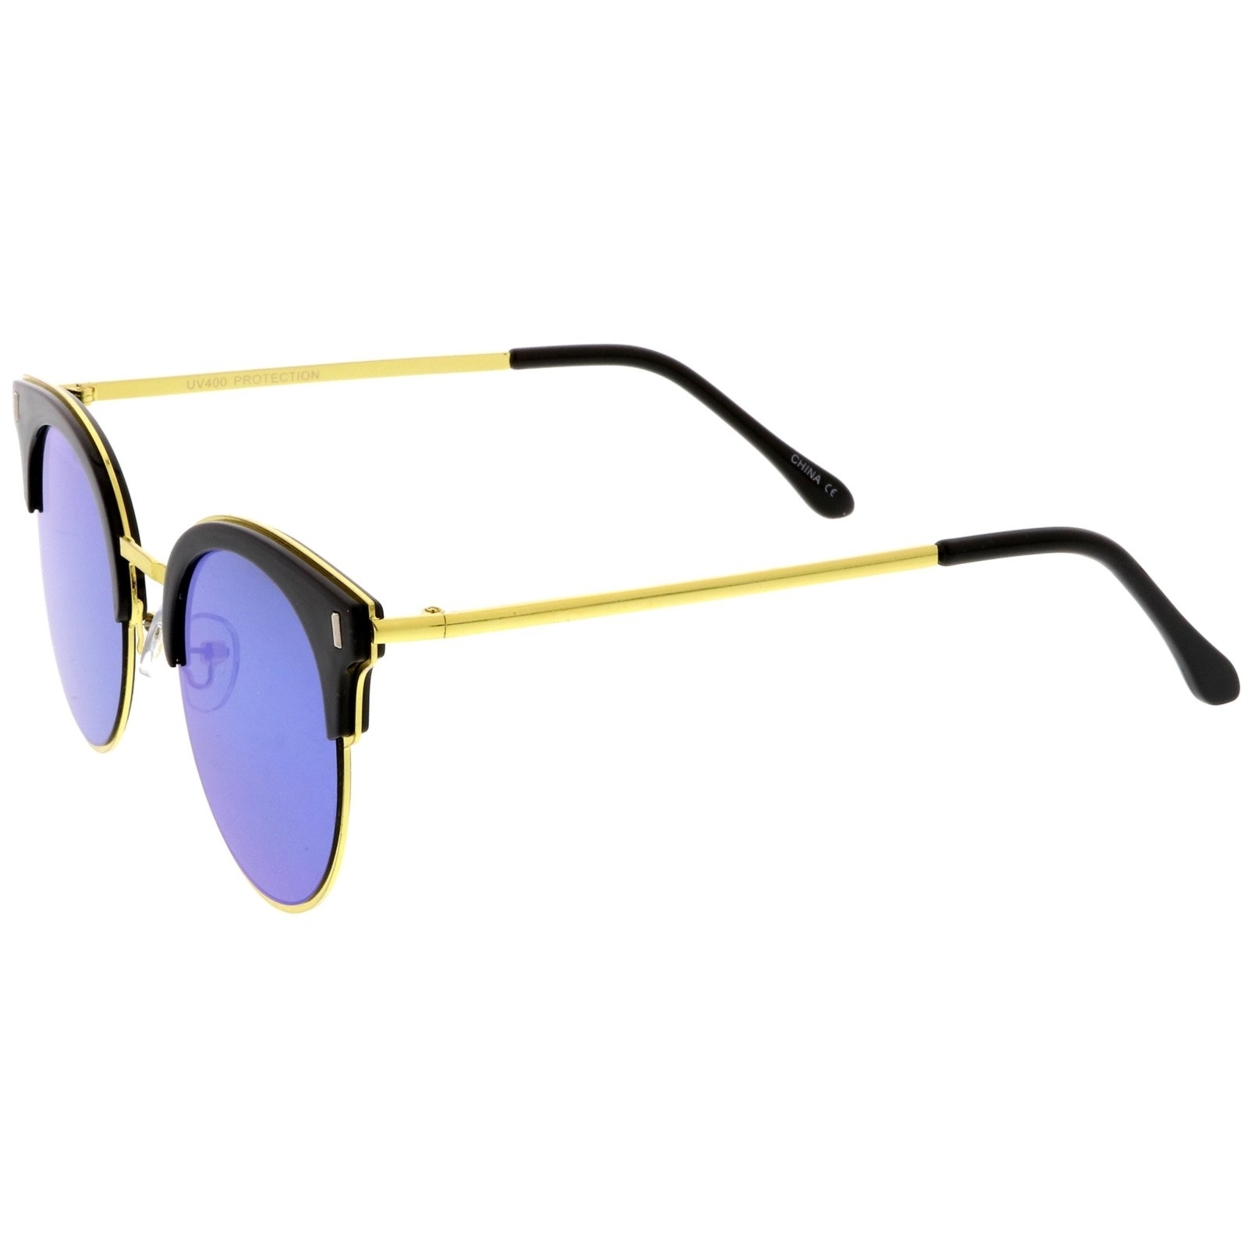 Modern Half Frame Round Colored Mirror Flat Lens Horn Rimmed Sunglasses 49mm - Tortoise-Gold / Magenta Mirror